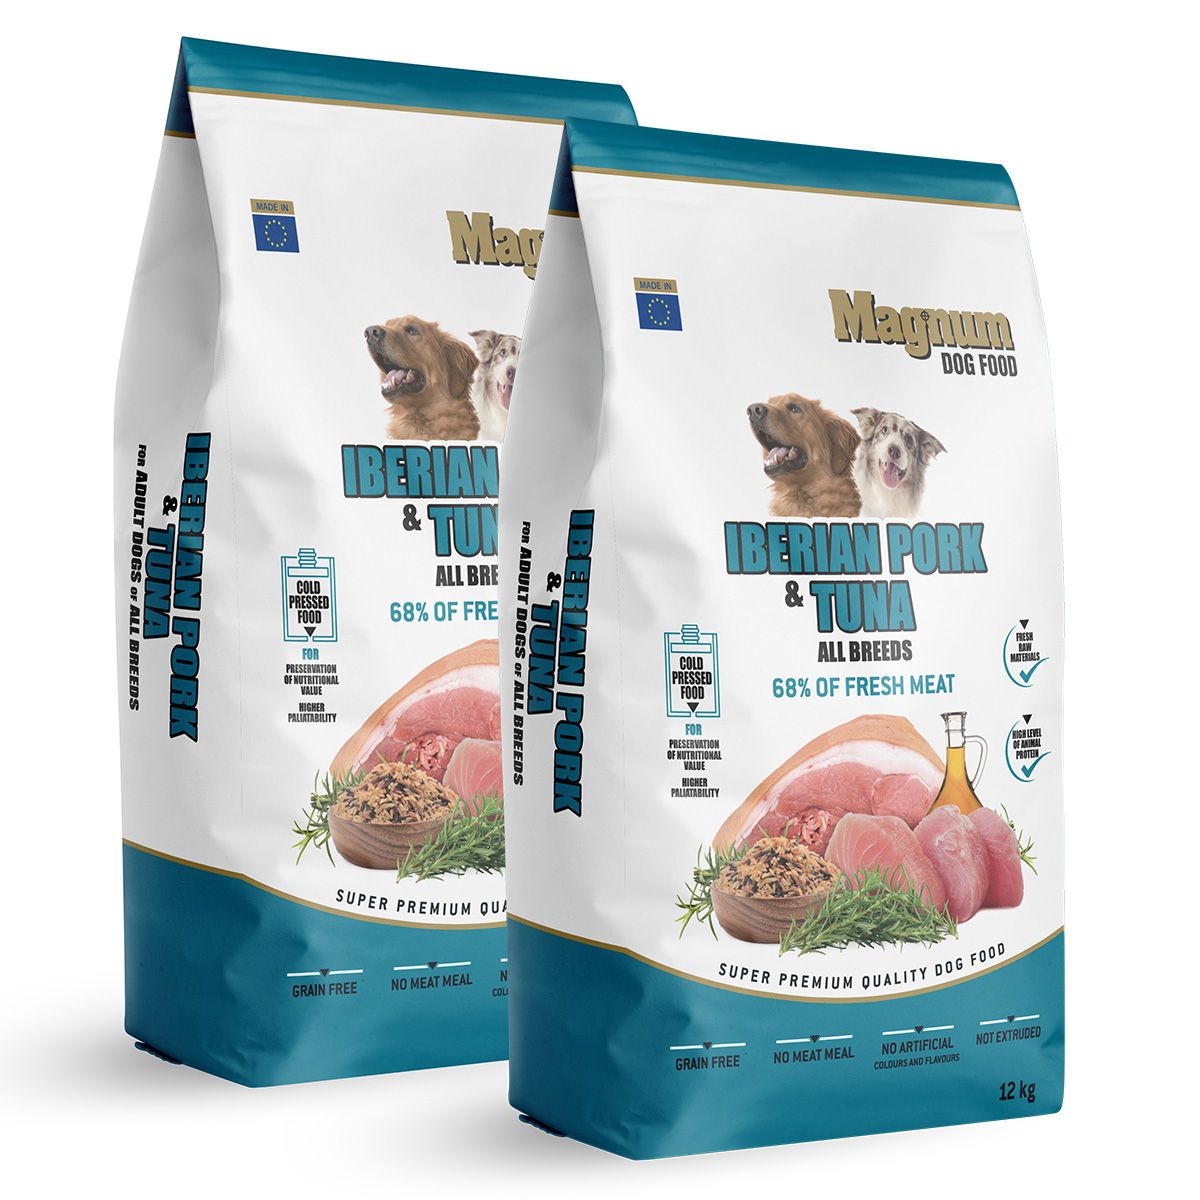 Magnum Iberian Pork & Tuna All Breed 2x12kg Magnum dog food